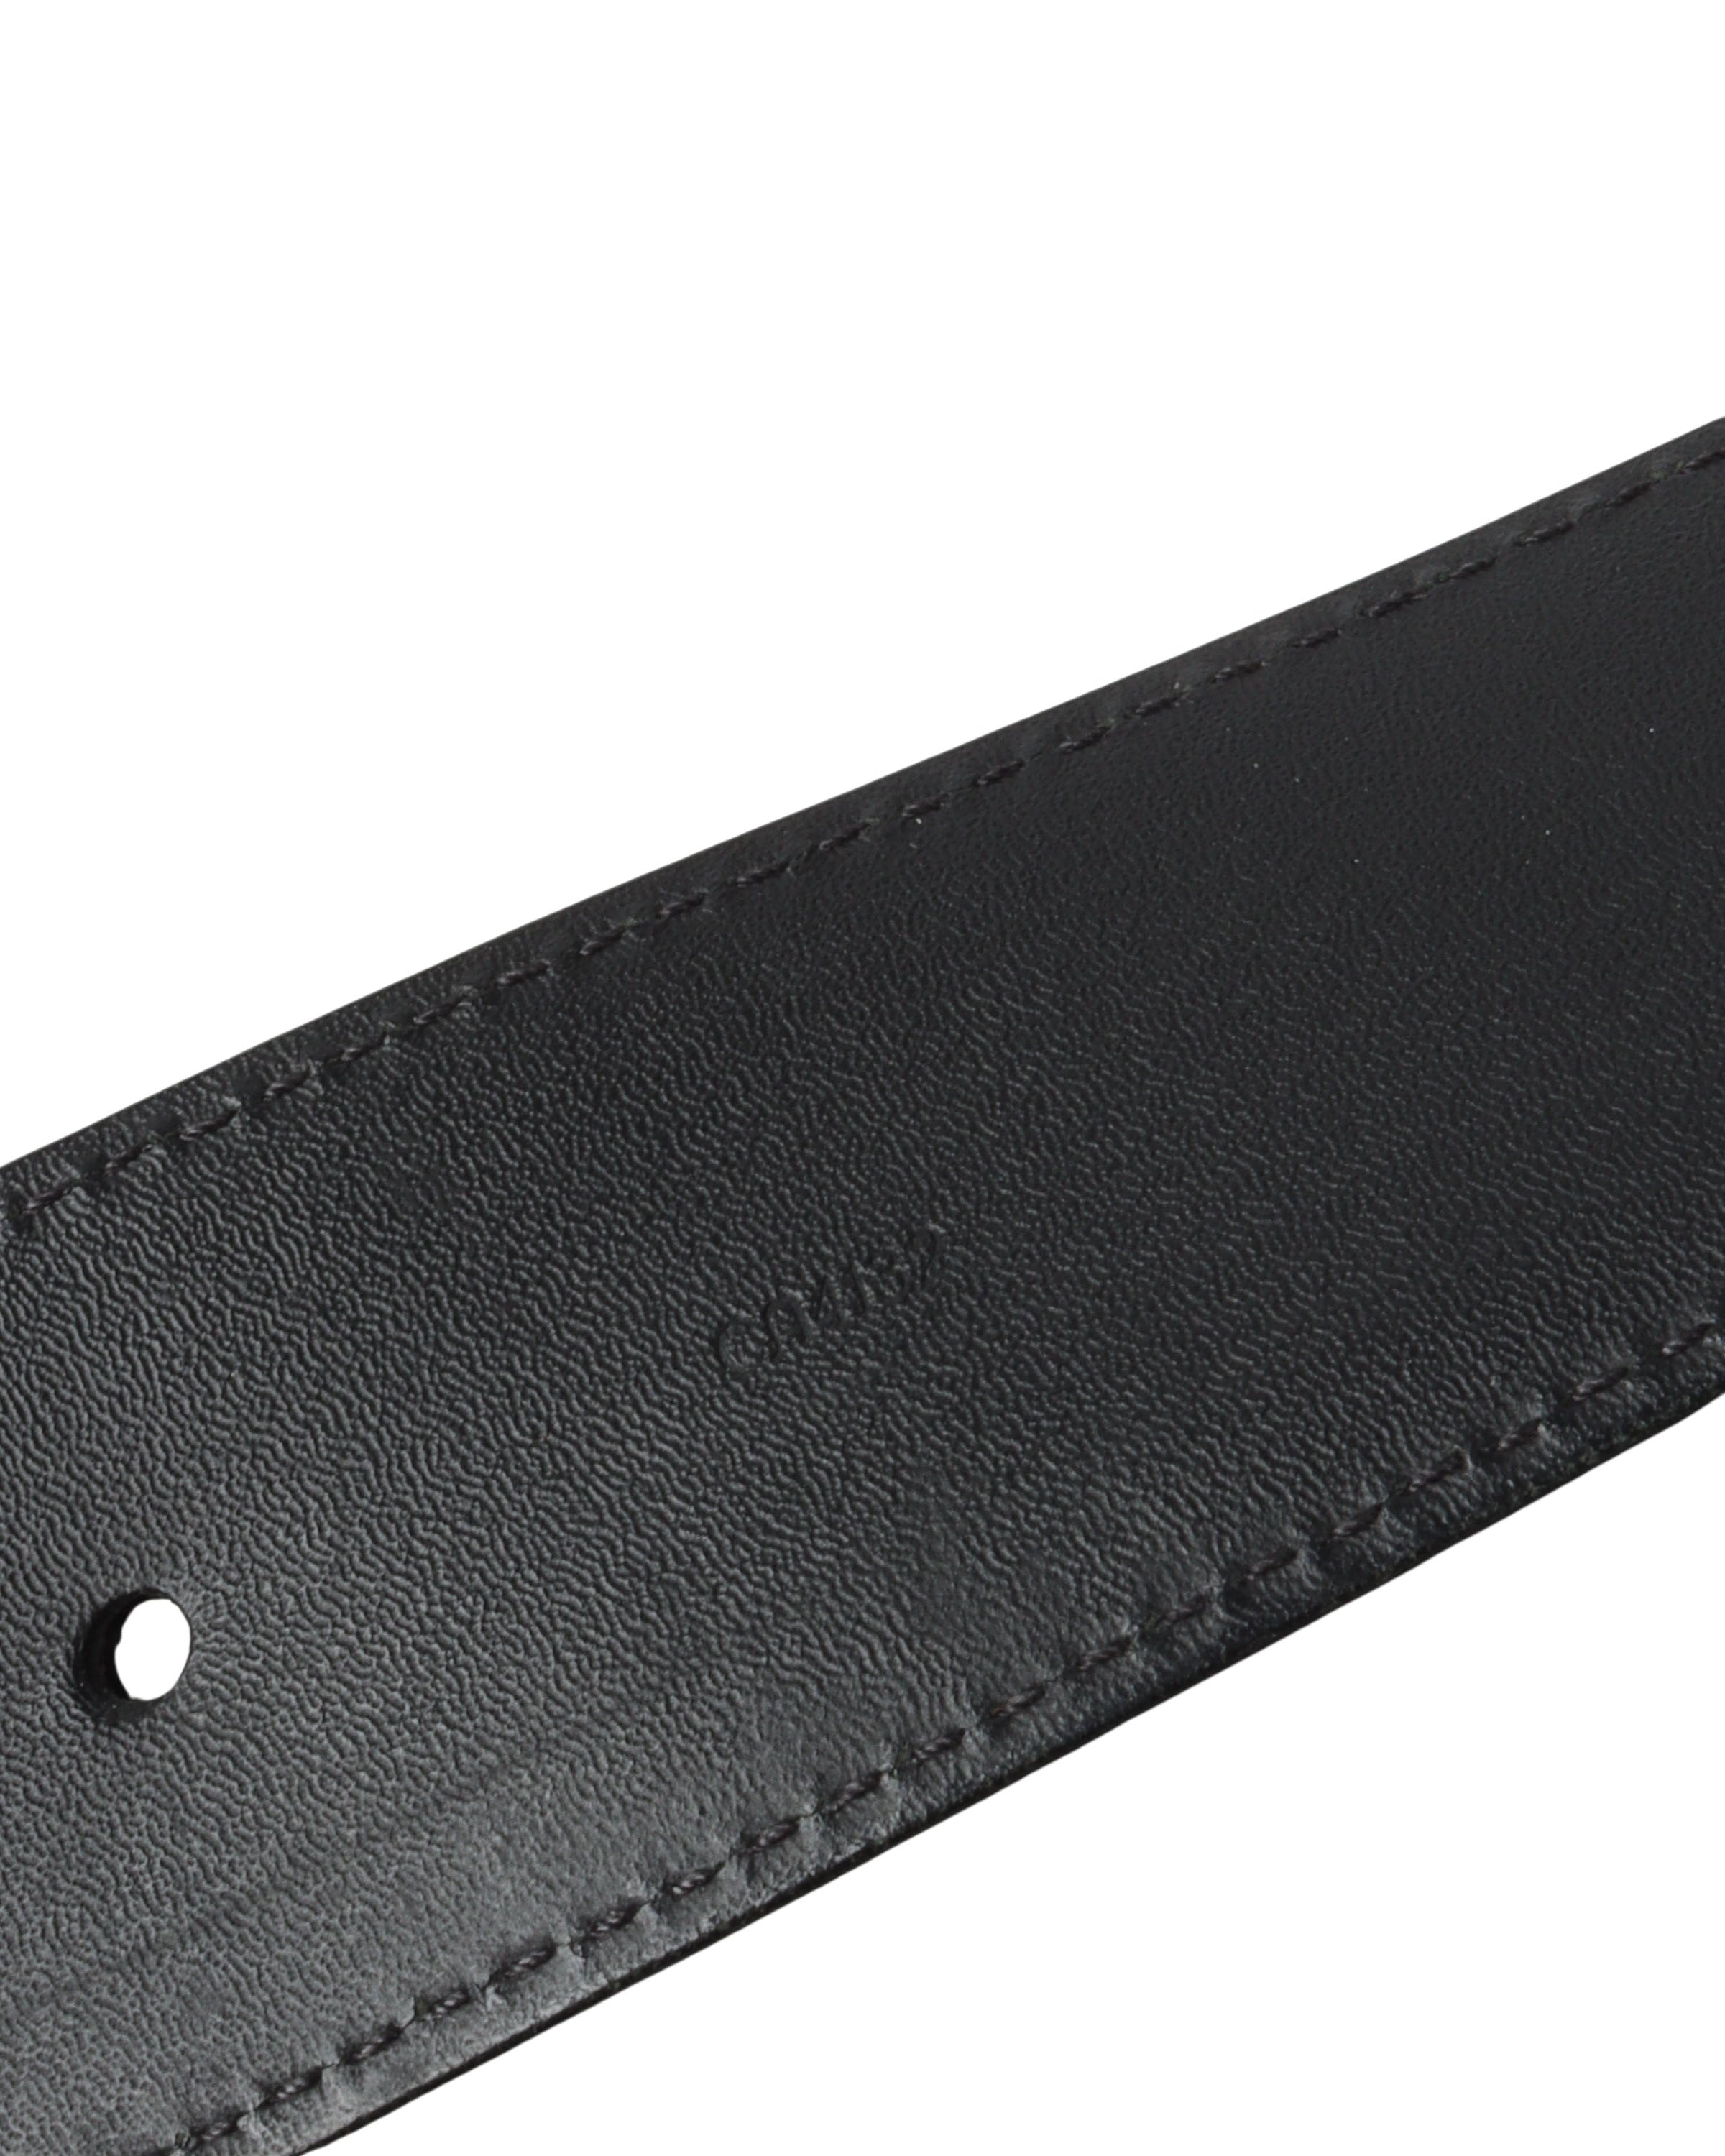 Damier Monogram Leather Belt